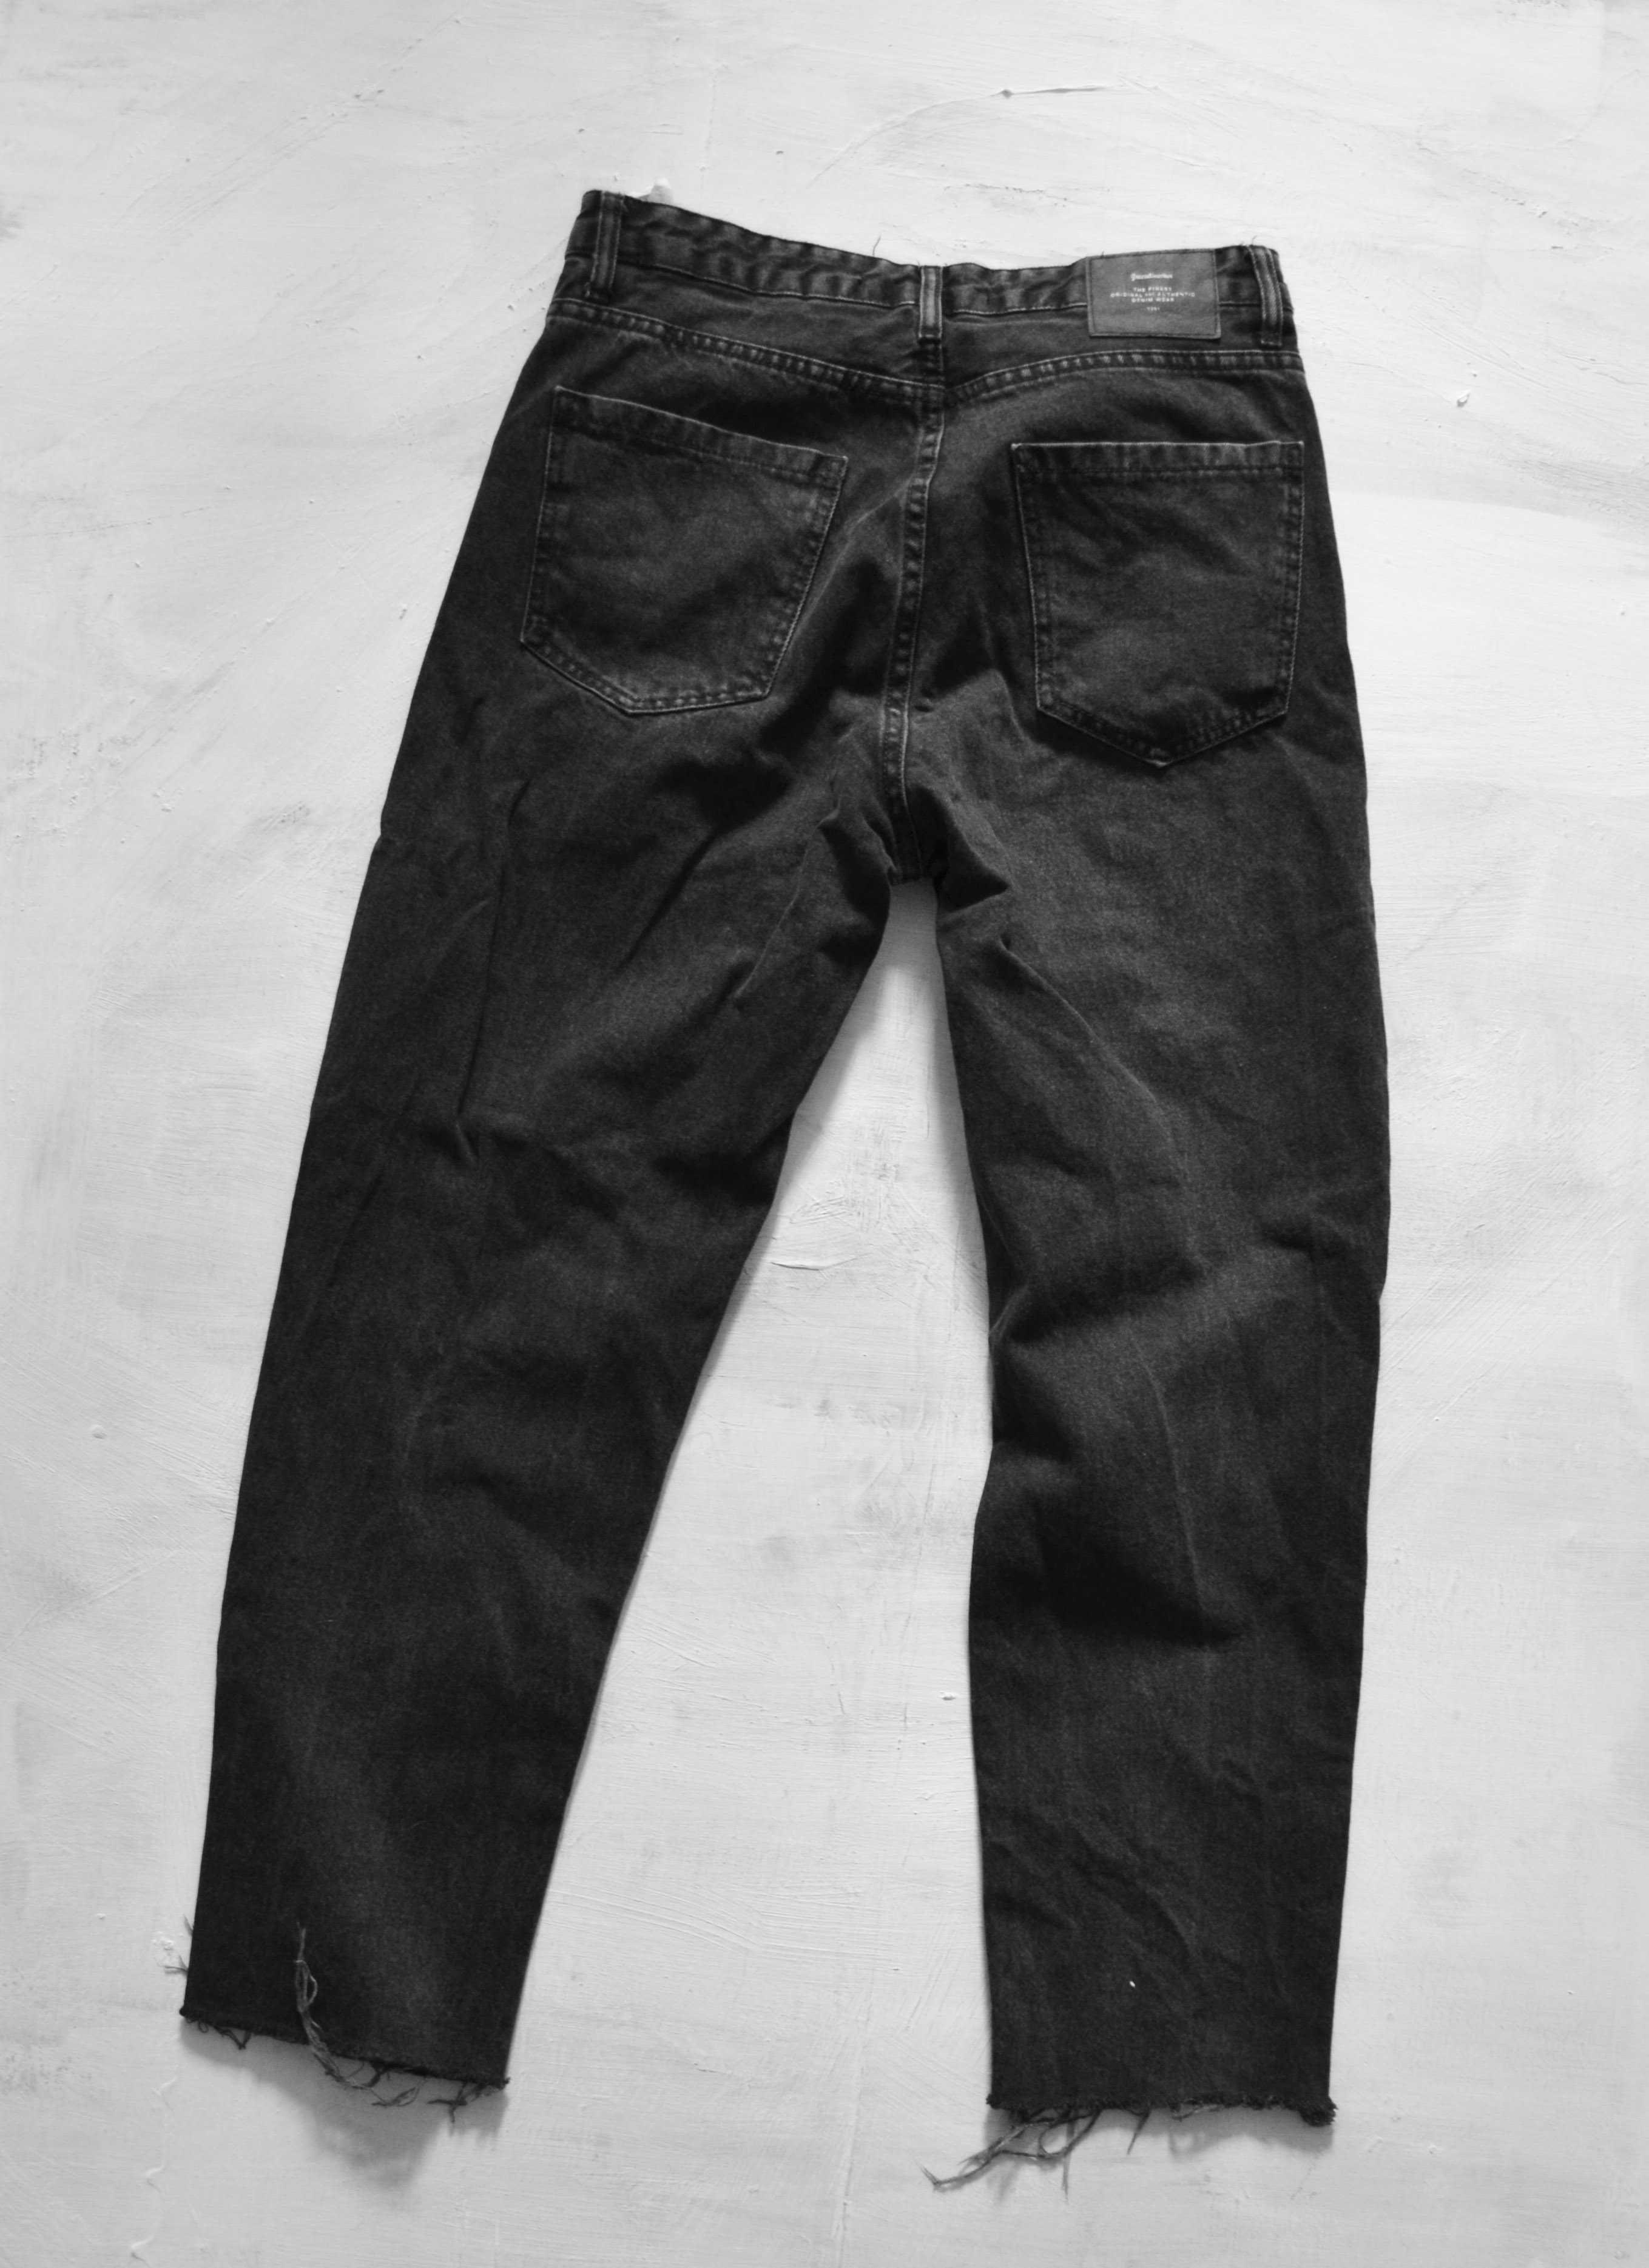 mom jeans czarne jeansy z dziurami stradivarius S/M boyfriendy vintage